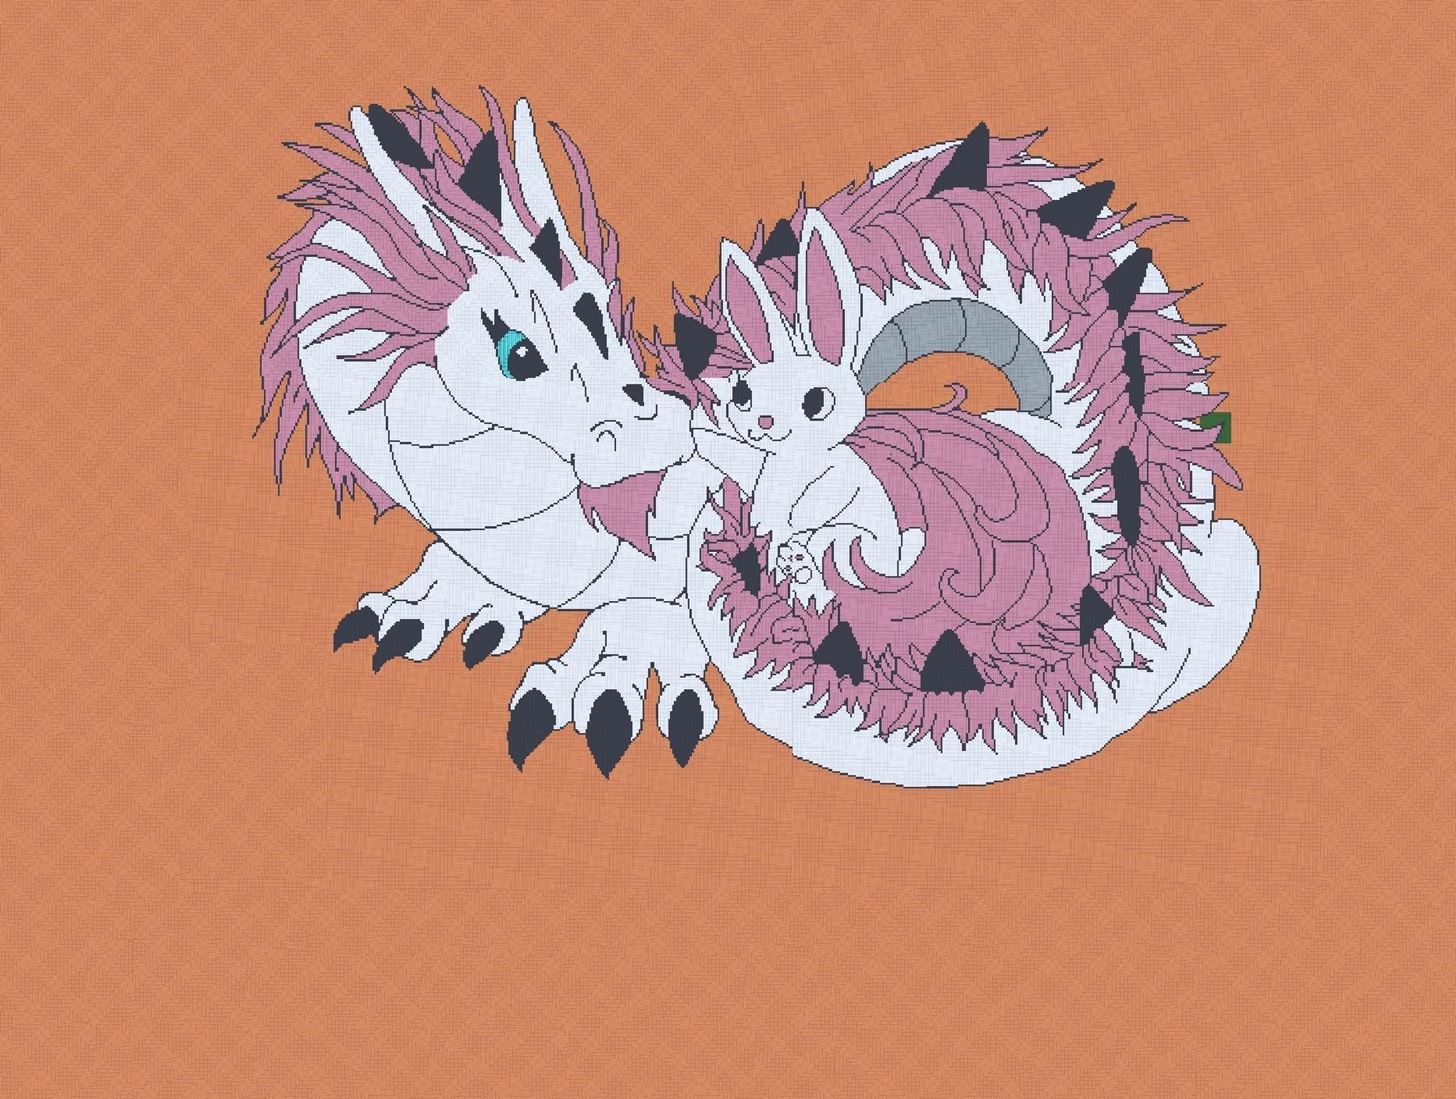 The Dragon&Bunny Pixel-Art